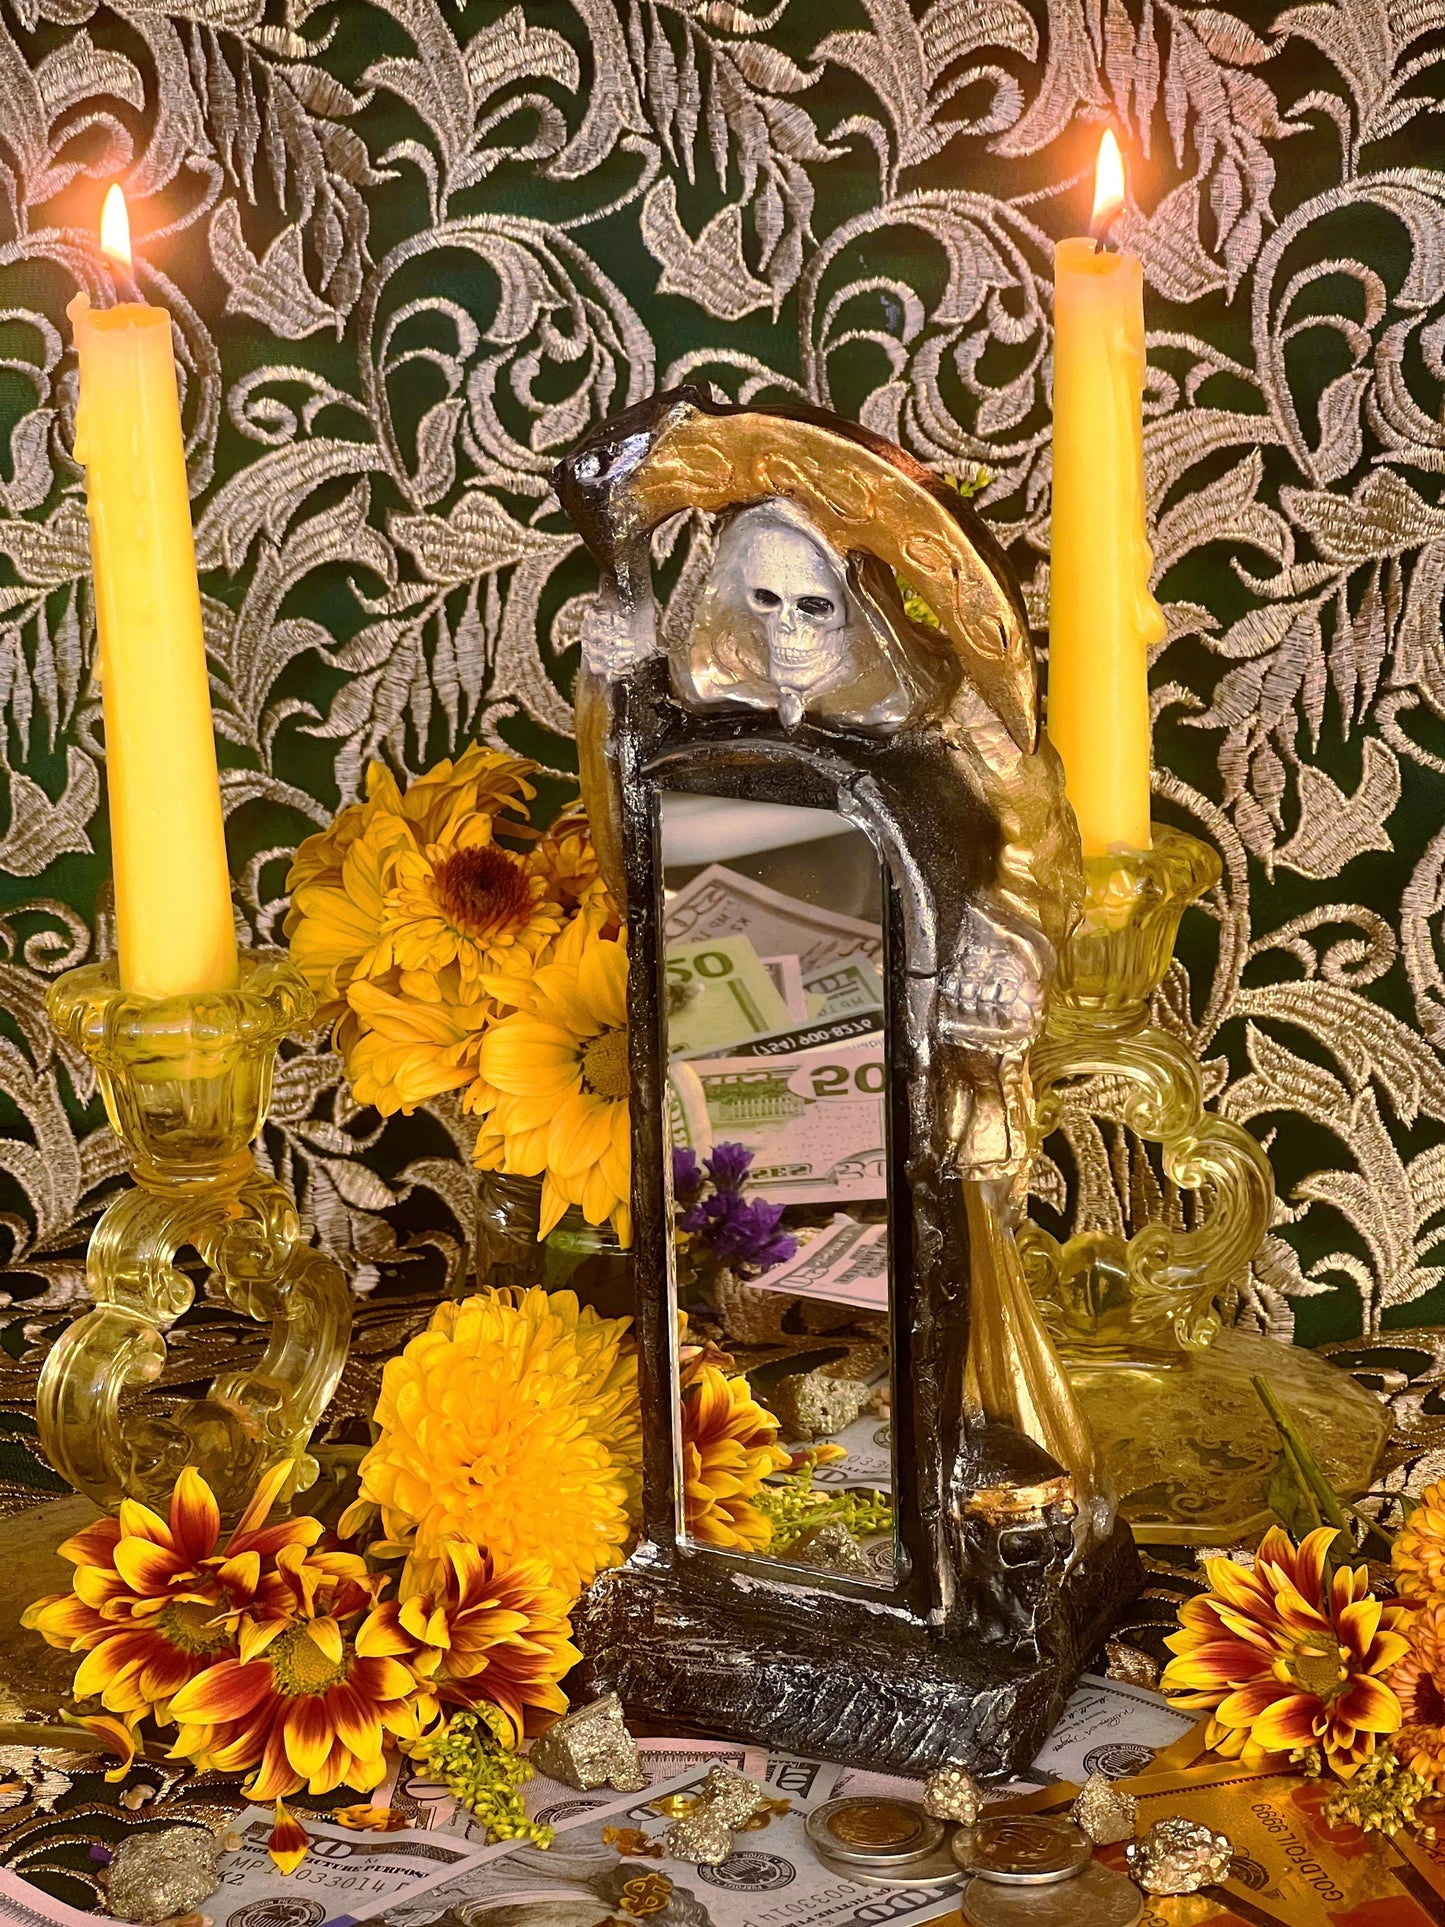 Santa Muerte Dorada Reversing Mirror Statue + Espejo + Baptized + Fixed + Made in Mexico